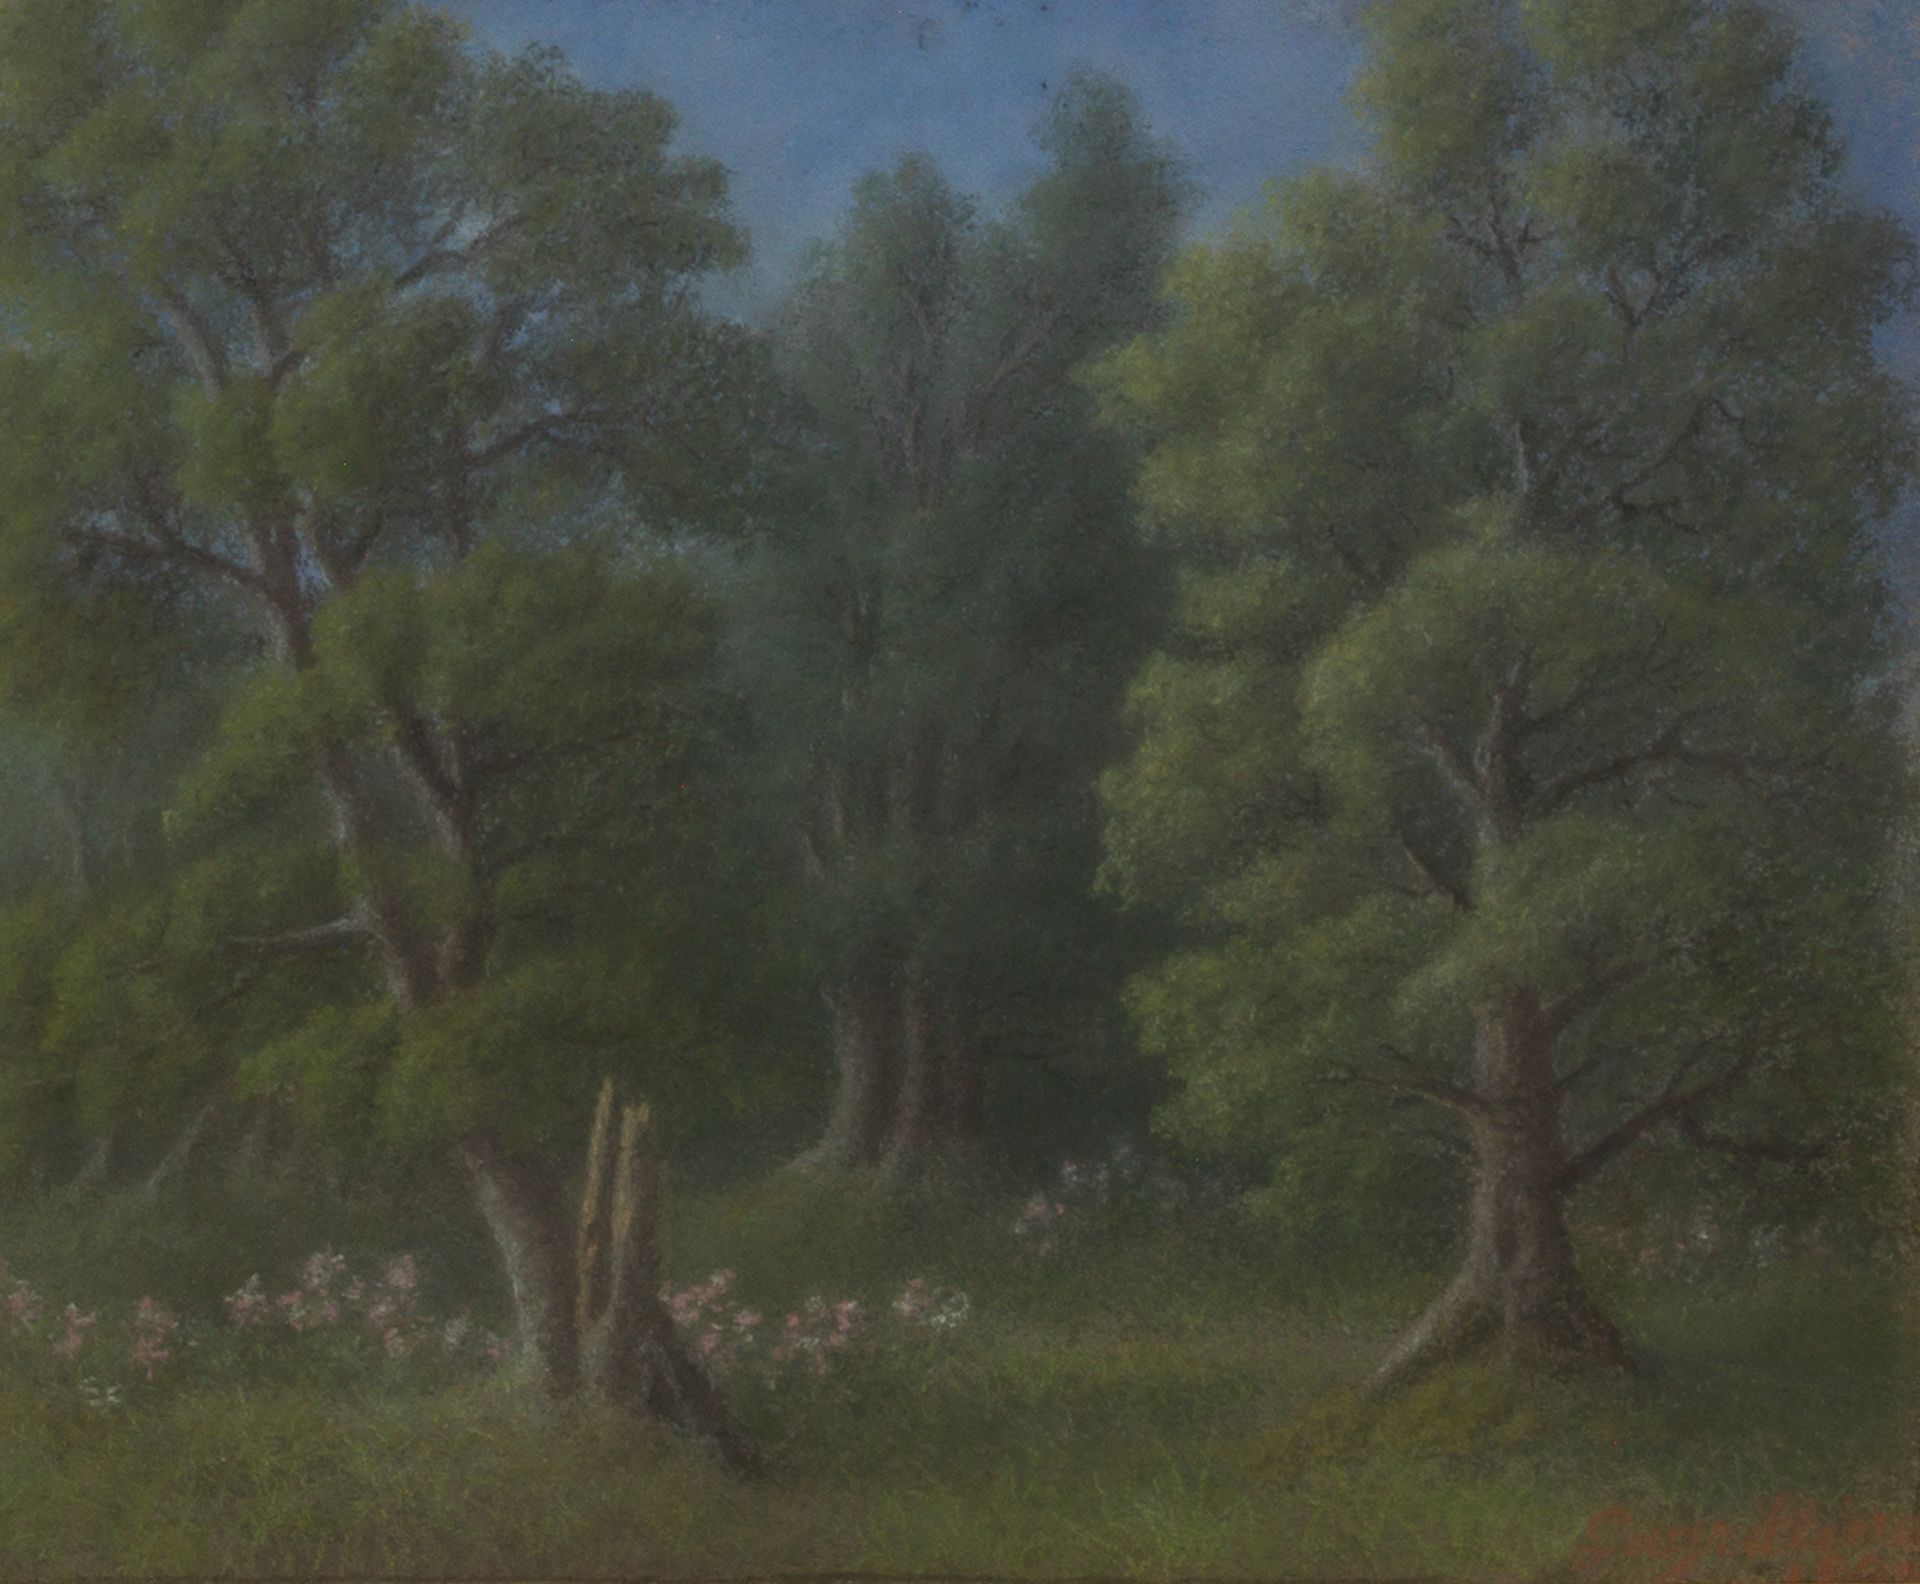 Null LAGRILLIÈRE (20世纪)
森林，1900年
纸上粉笔画，右下角有签名和日期
23 x 27 cm